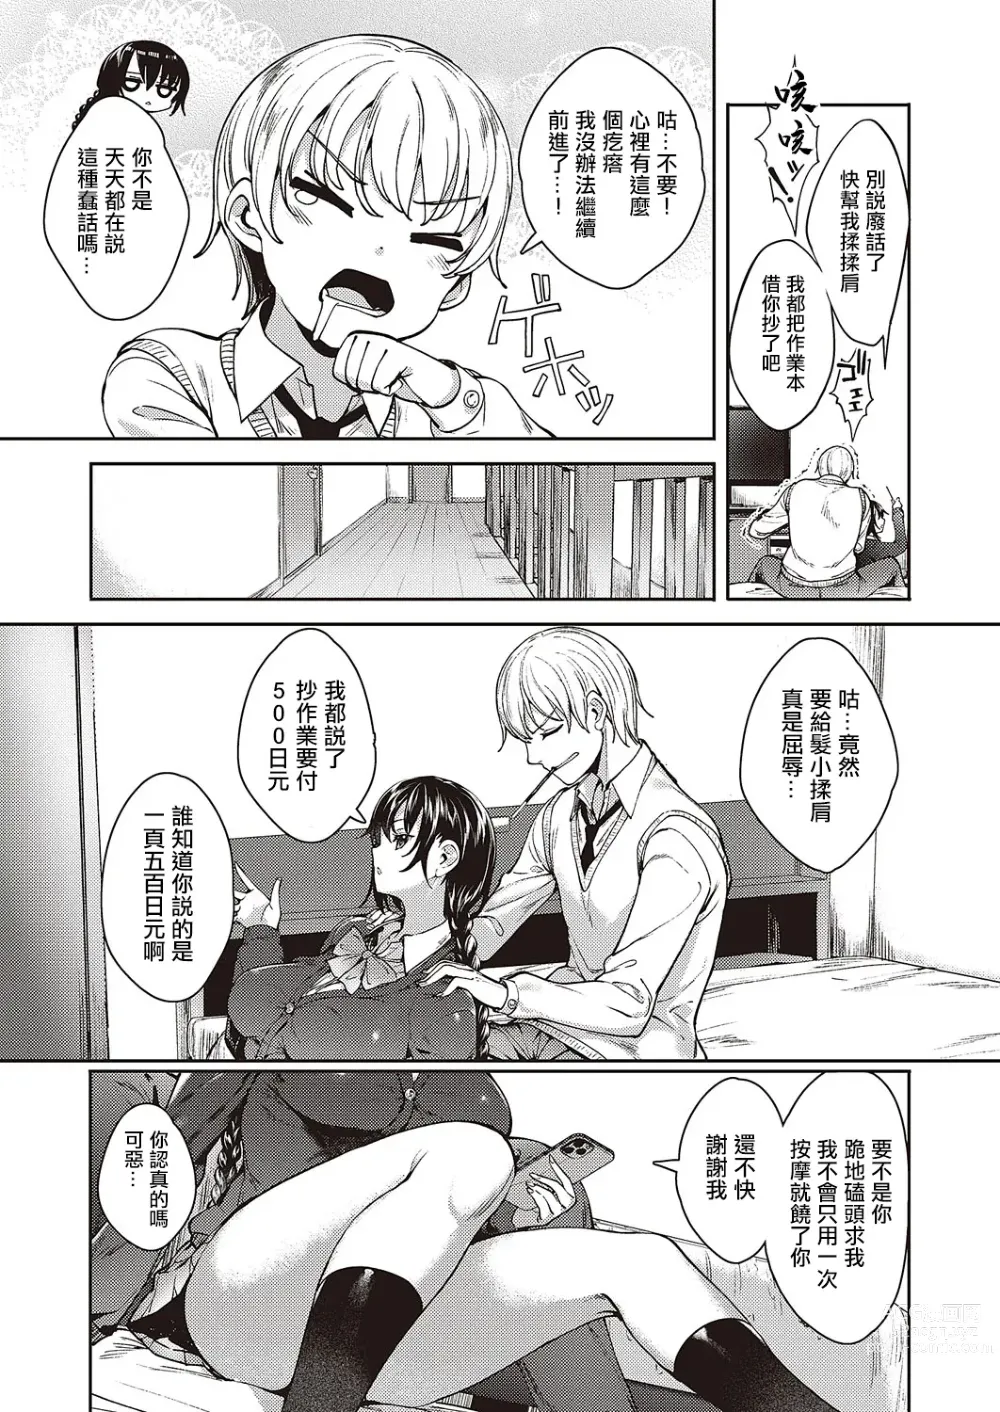 Page 3 of manga めぐりどころ 1歩